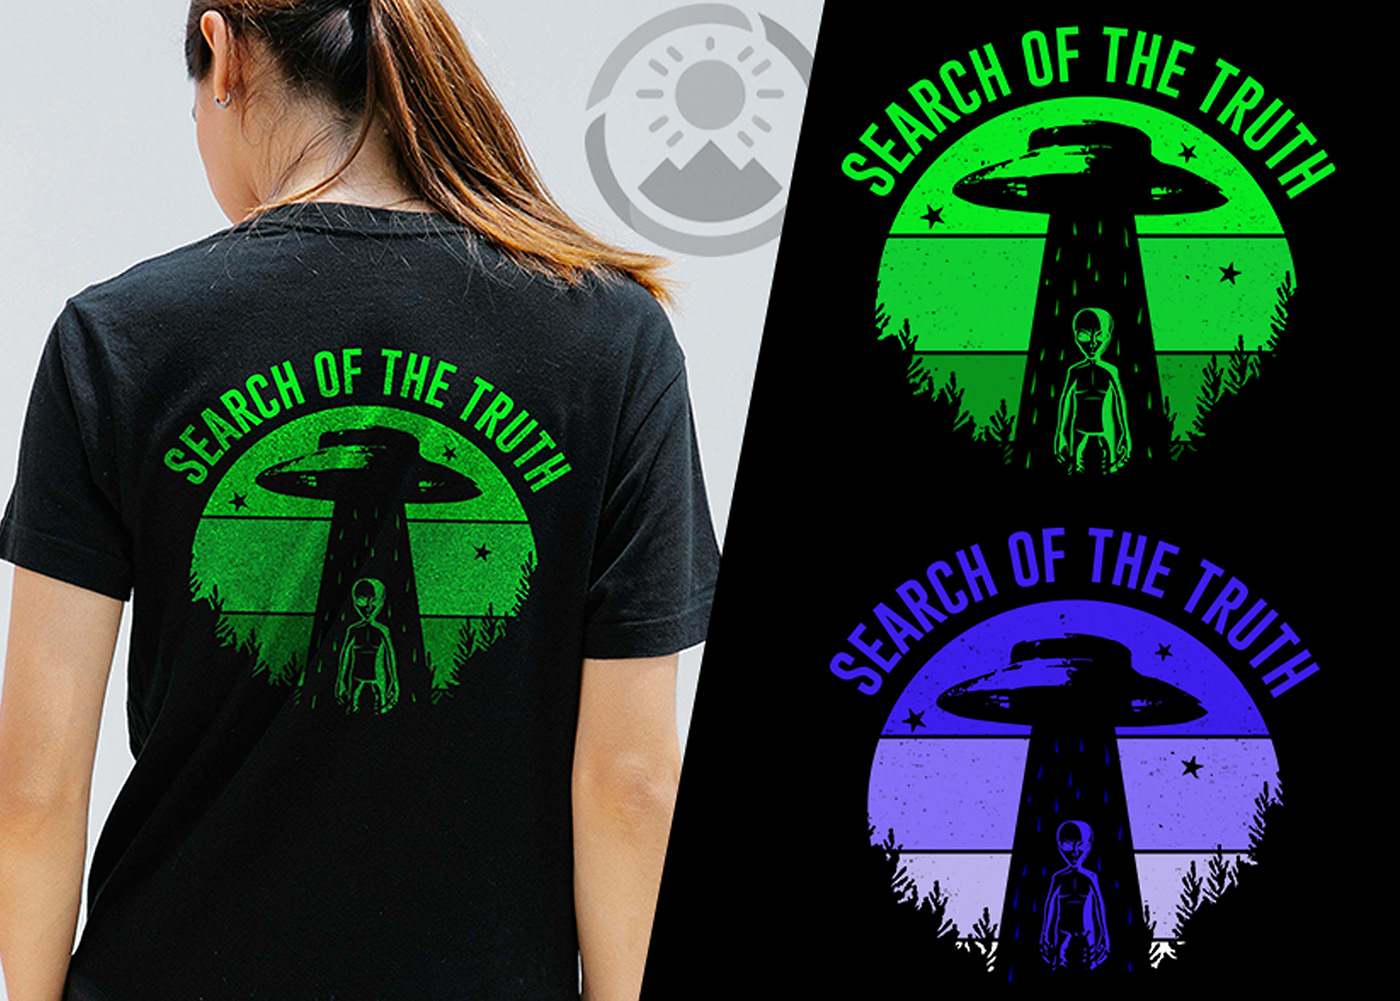 retro color UFO alien T-shirt design

